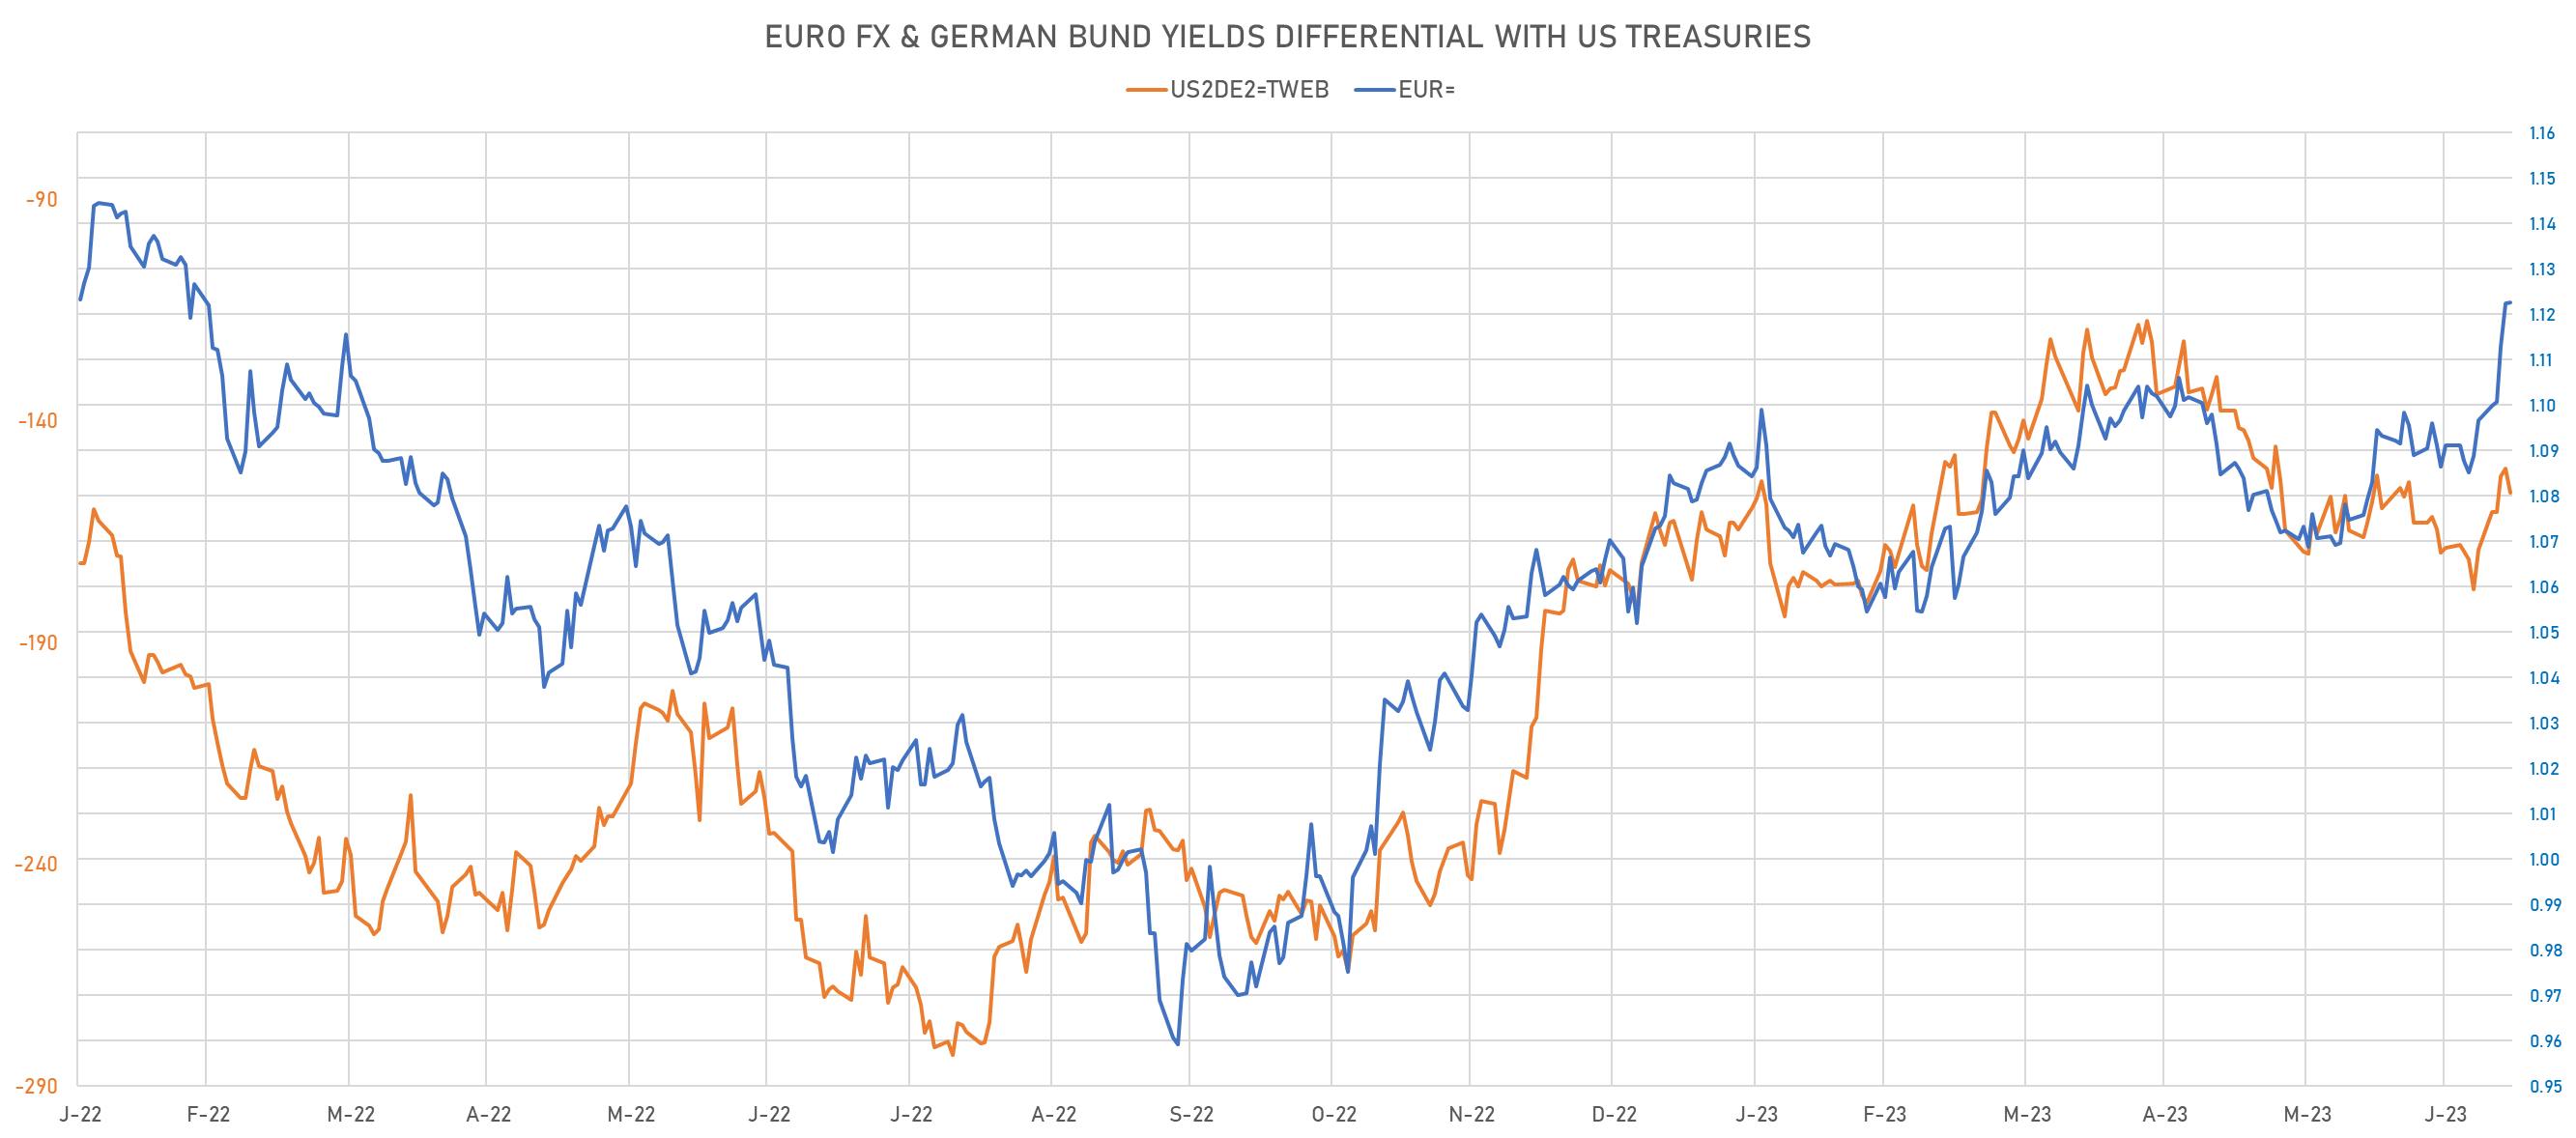 2Y German - US rates differentials vs EURUSD | Sources; phipost.com, Refinitiv data